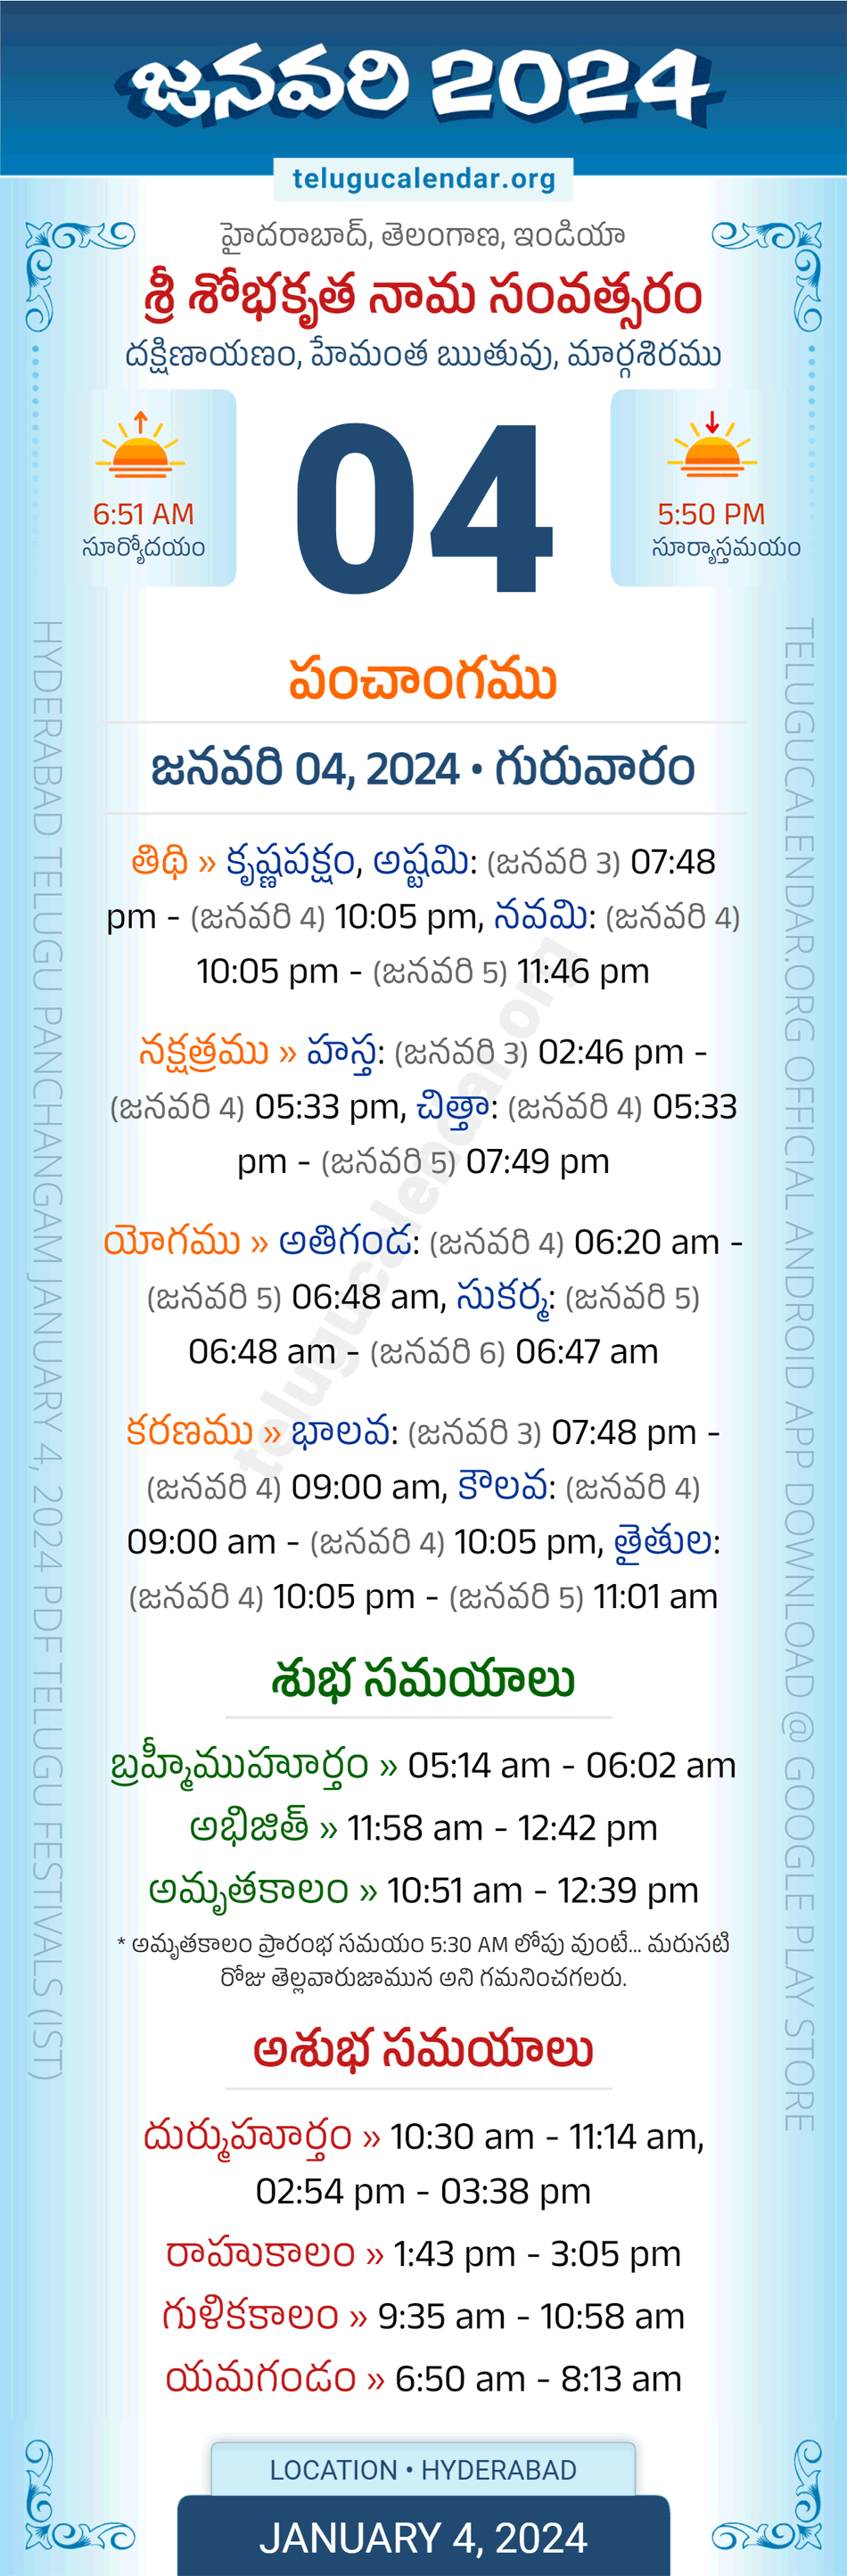 Jan 2024 Calendar Telugu Images Sharl Demetris